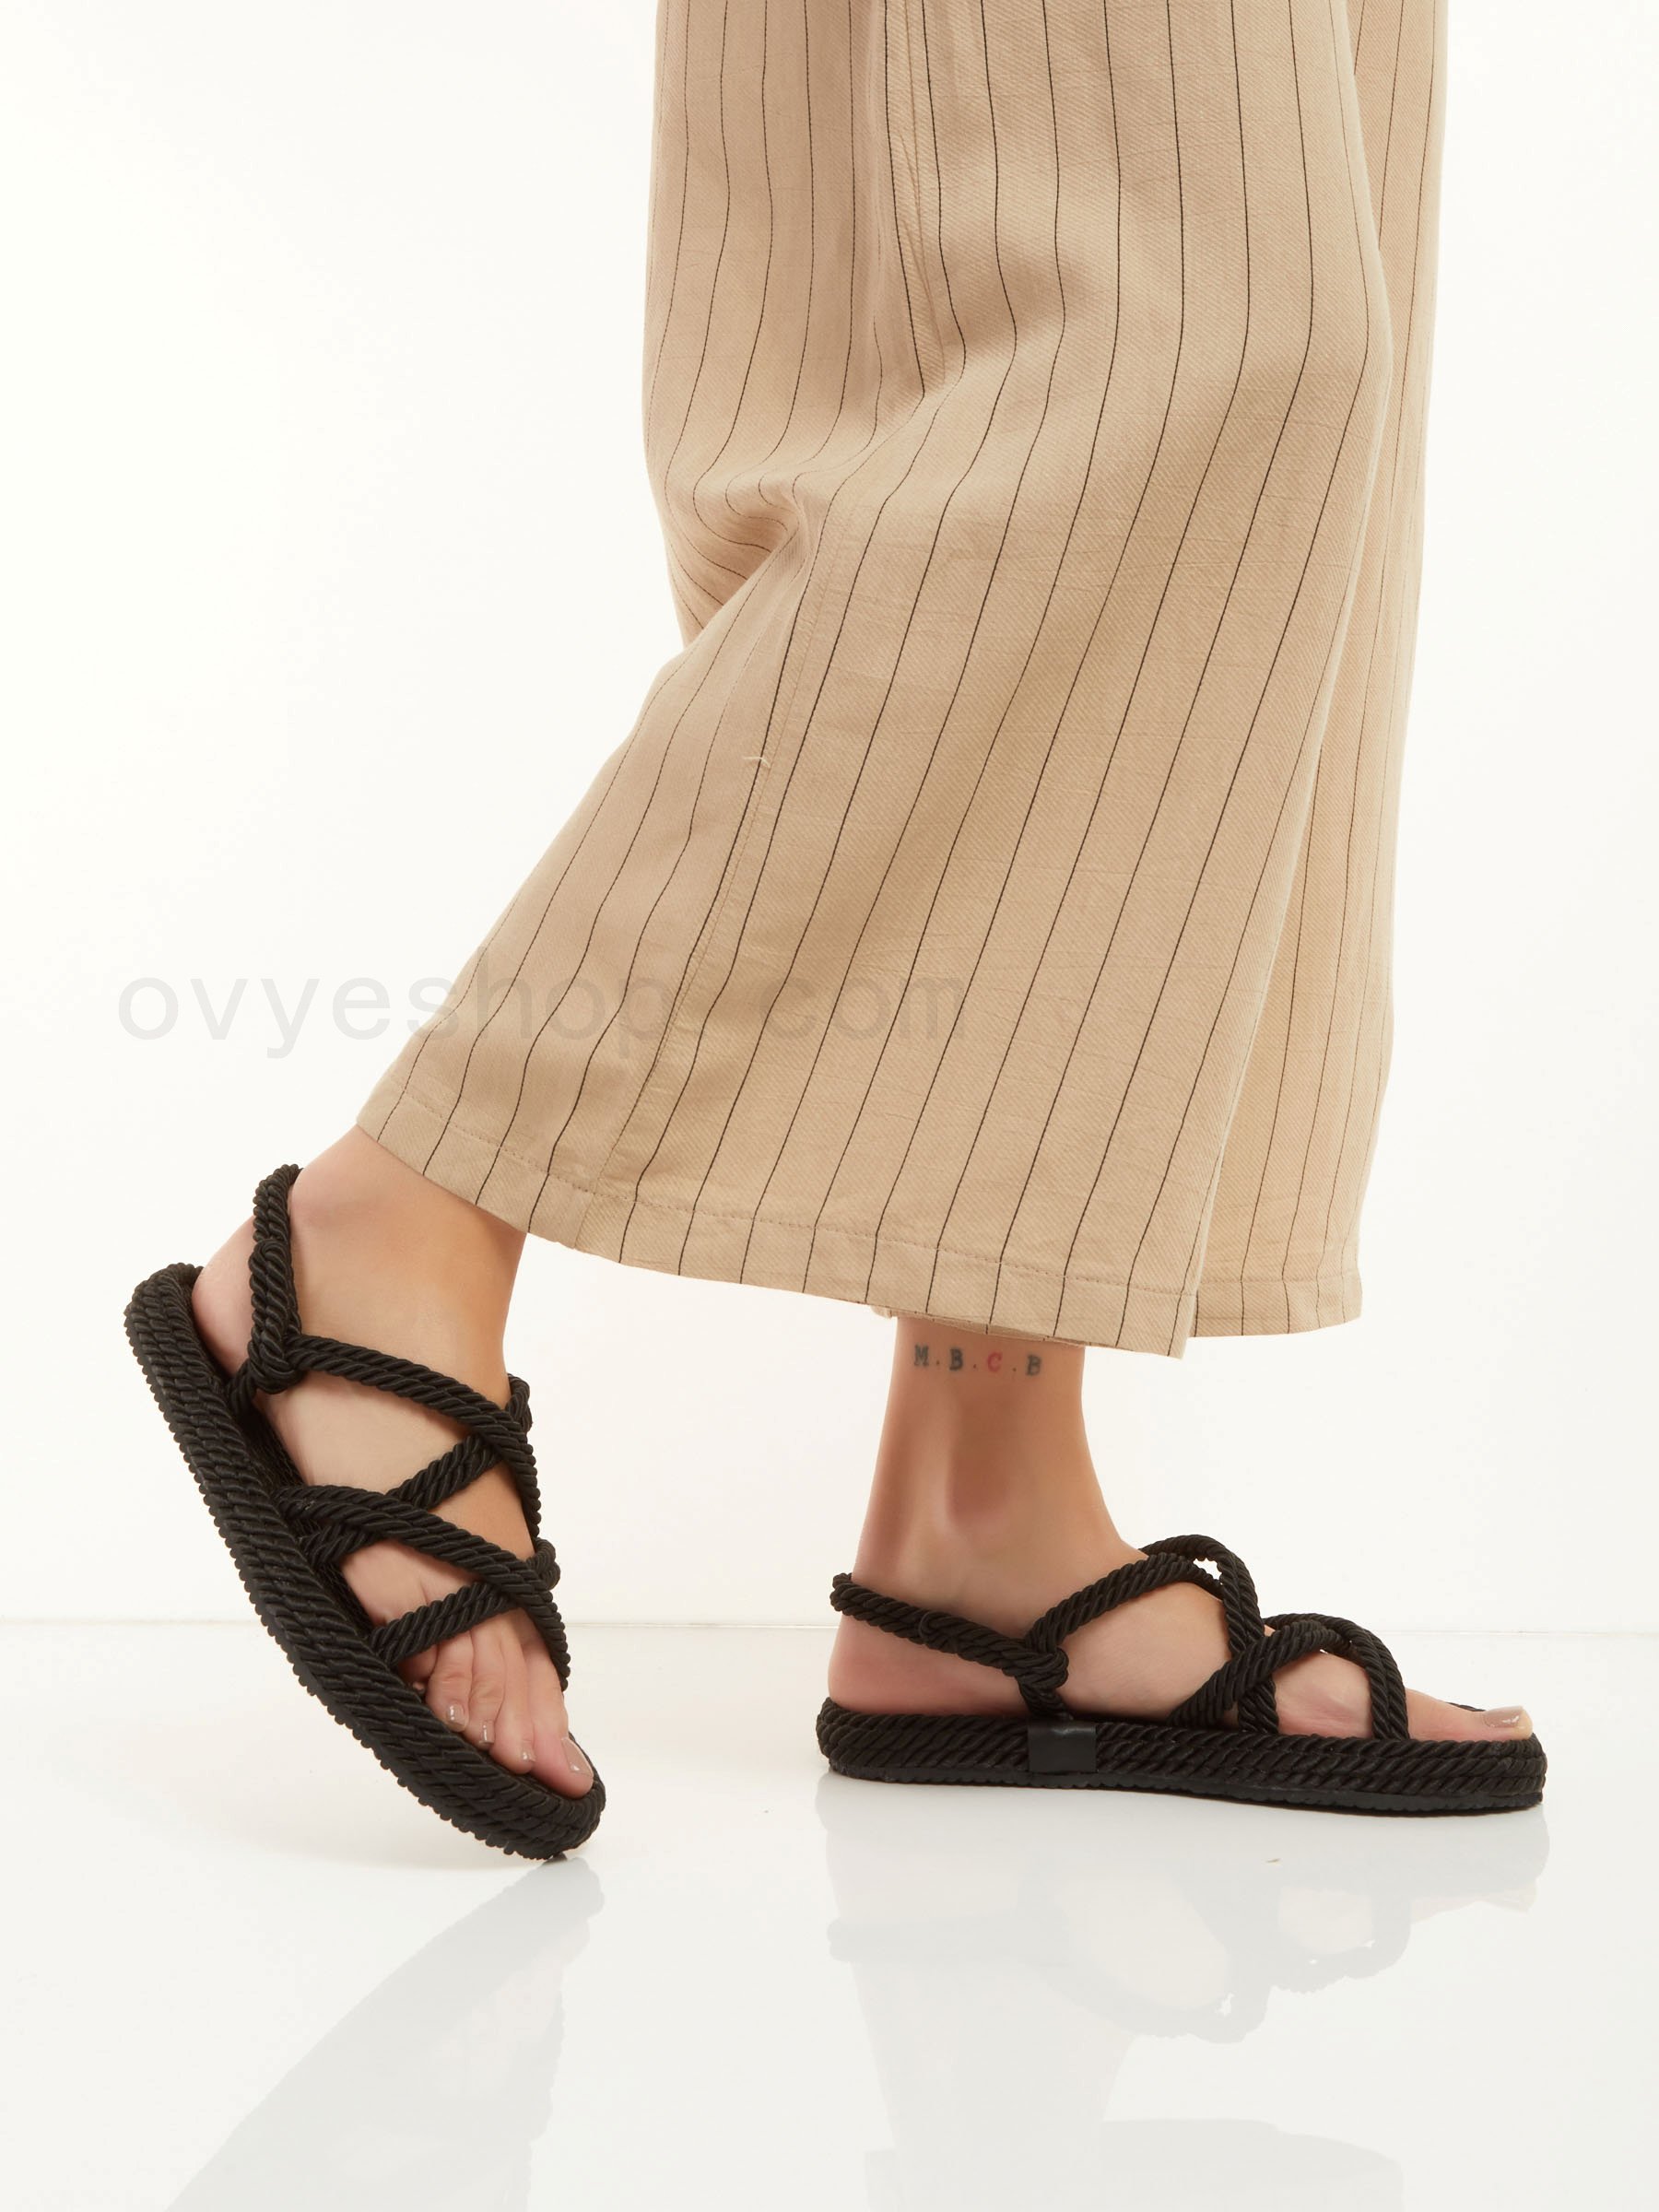 (image for) Prezzo Rope Flat Sandals F0817885-0712 ovye saldi